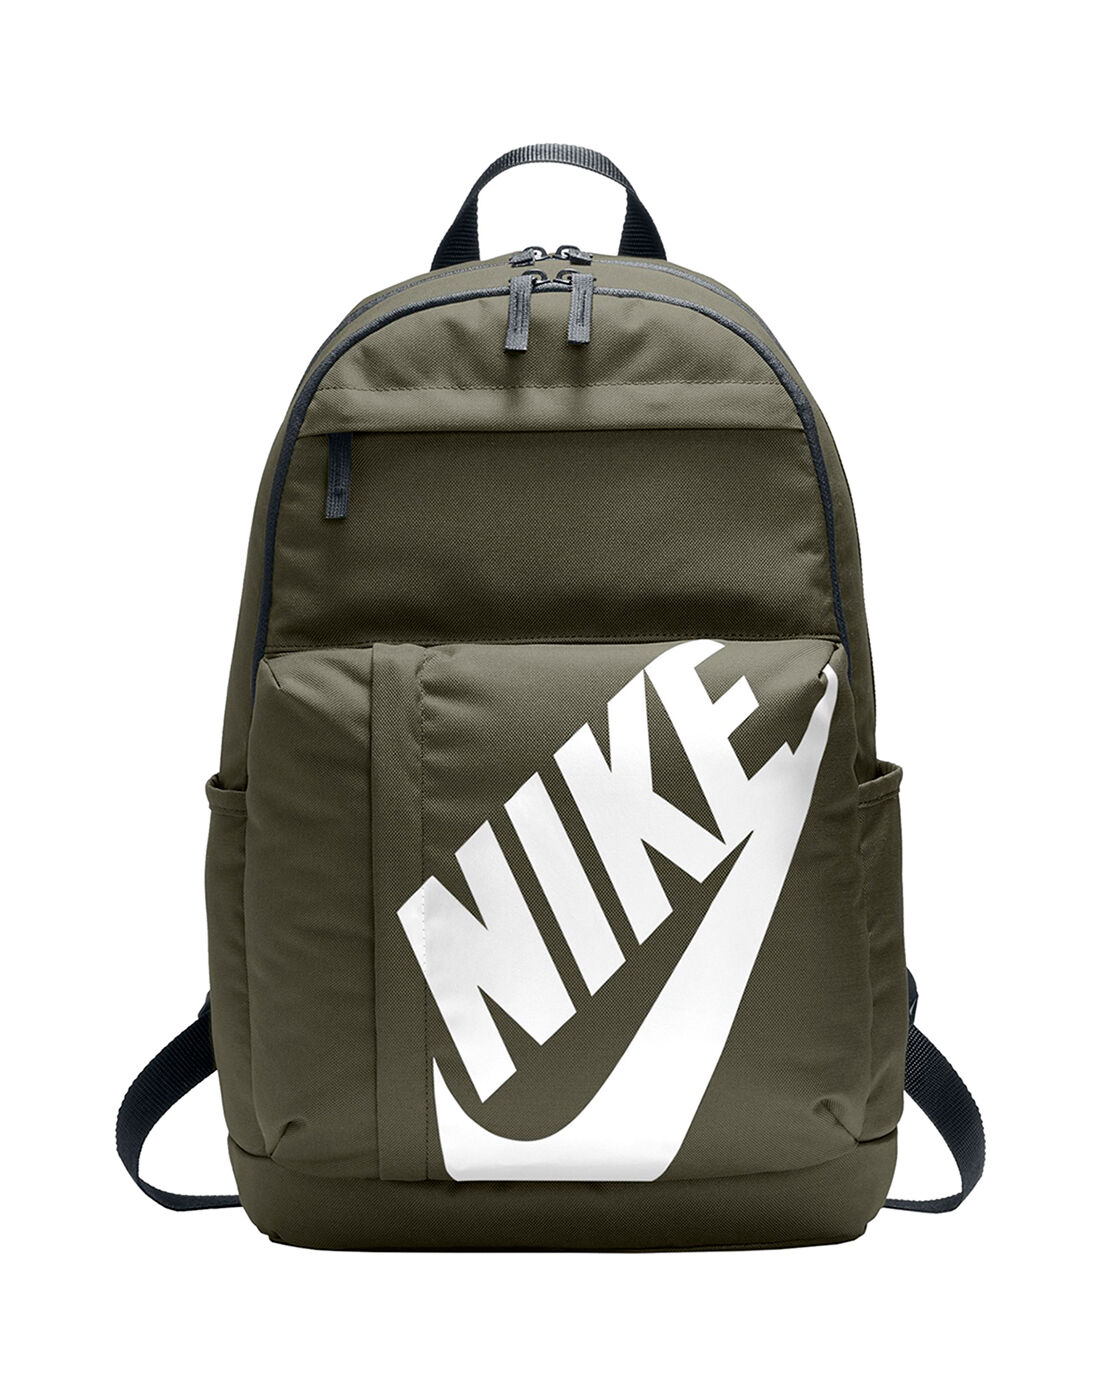 Green Nike Backpack | Life Style Sports